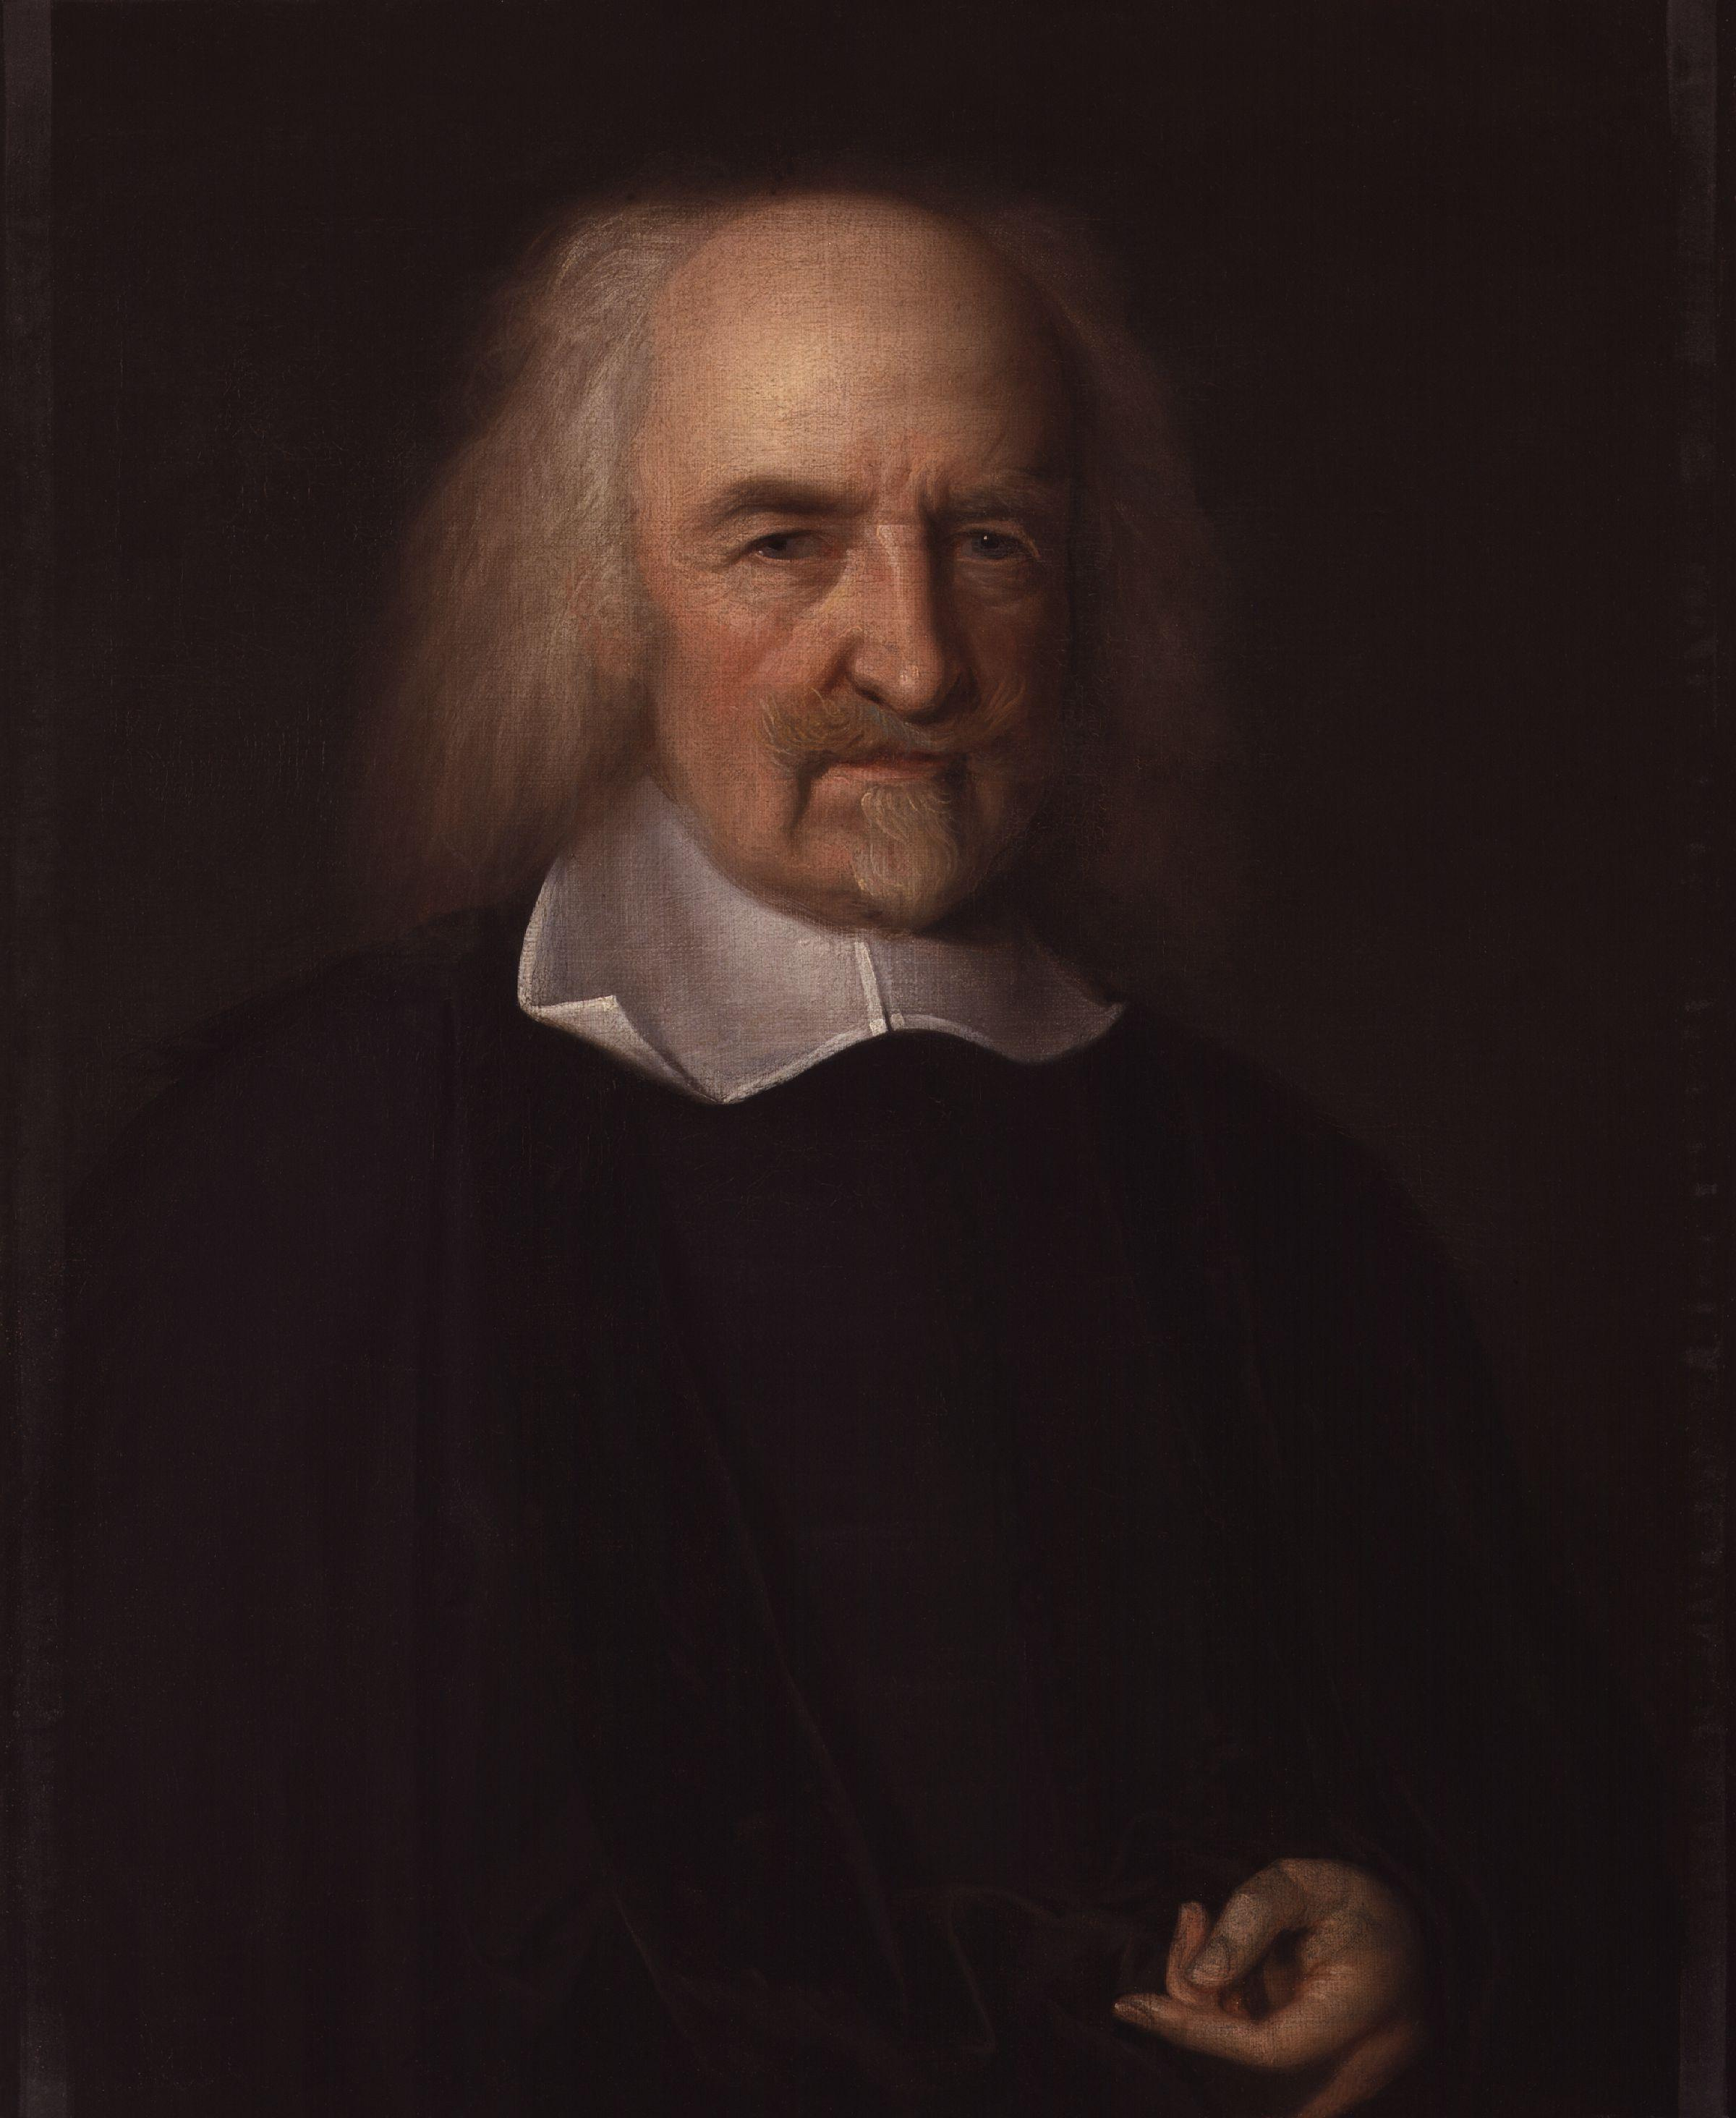  Biografie van Thomas Hobbes